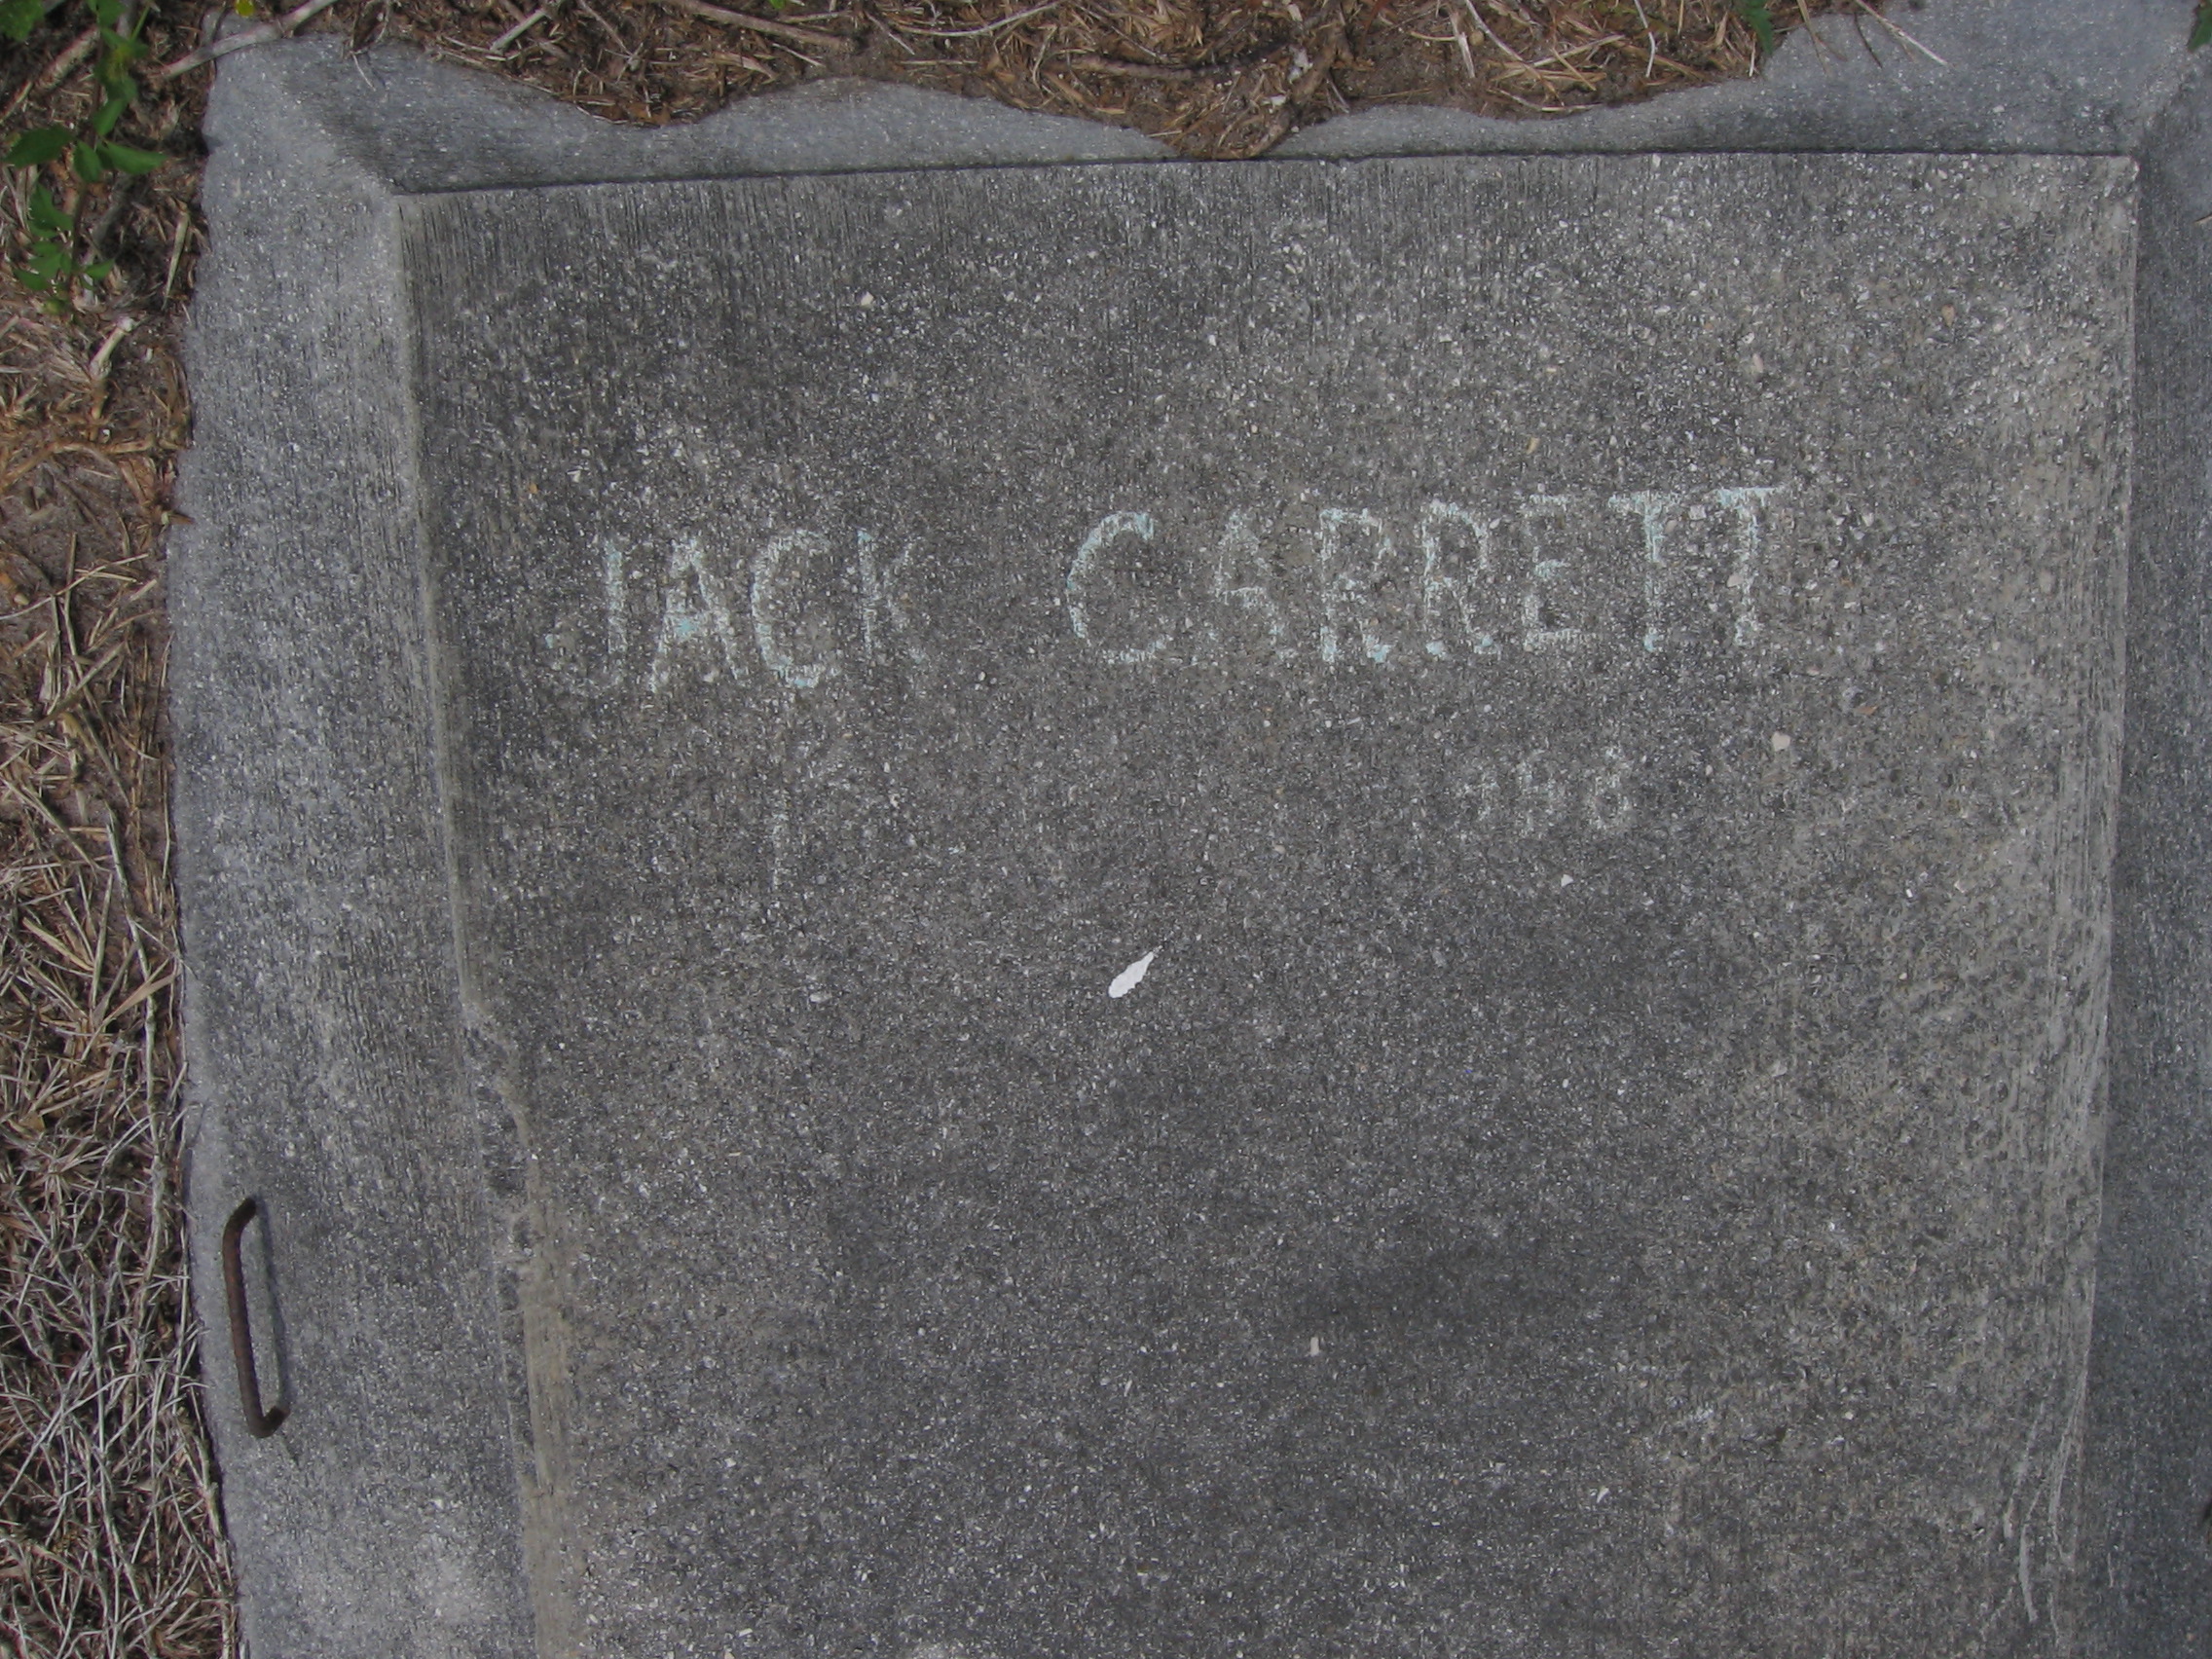 Jack Garrett